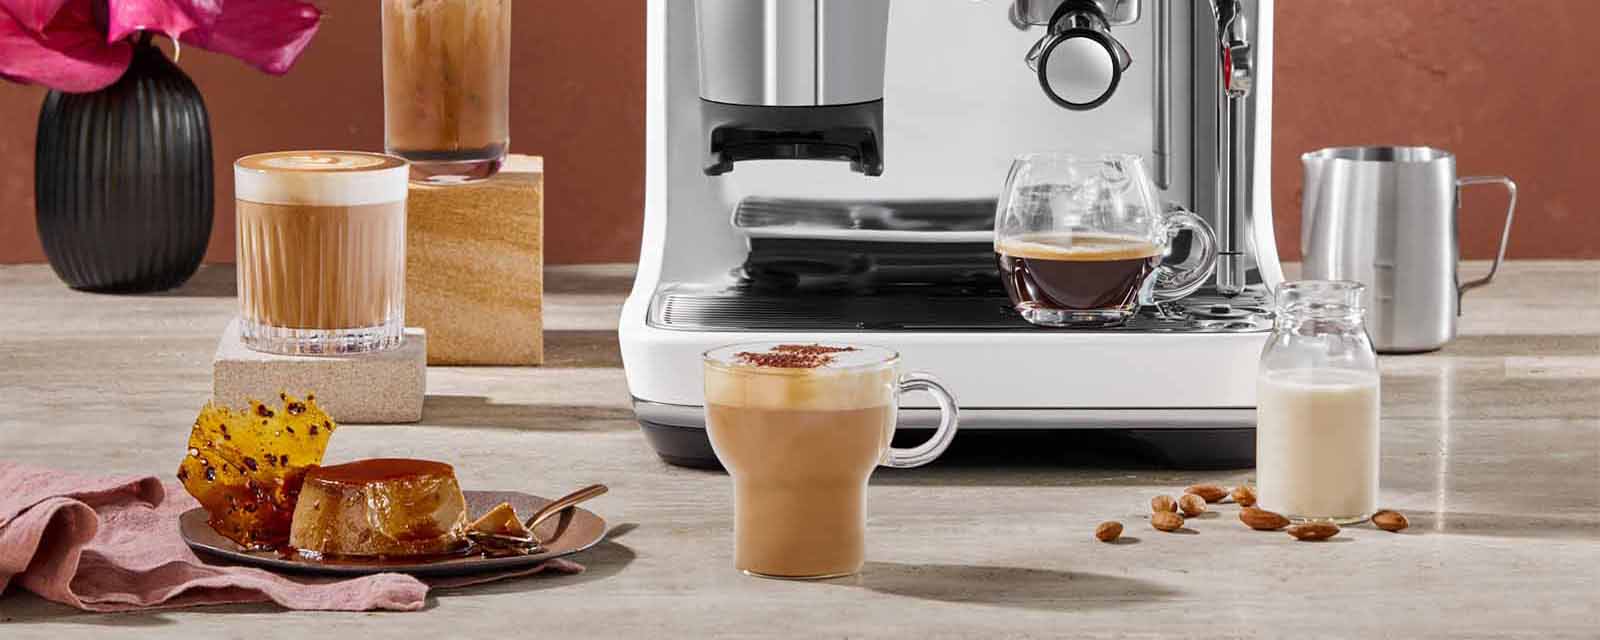 https://www.harveynorman.com.au/blog/assets/Recipes-for-Boozy-Spanish-Coffee-and-Espresso-Creme-Caramel.jpg